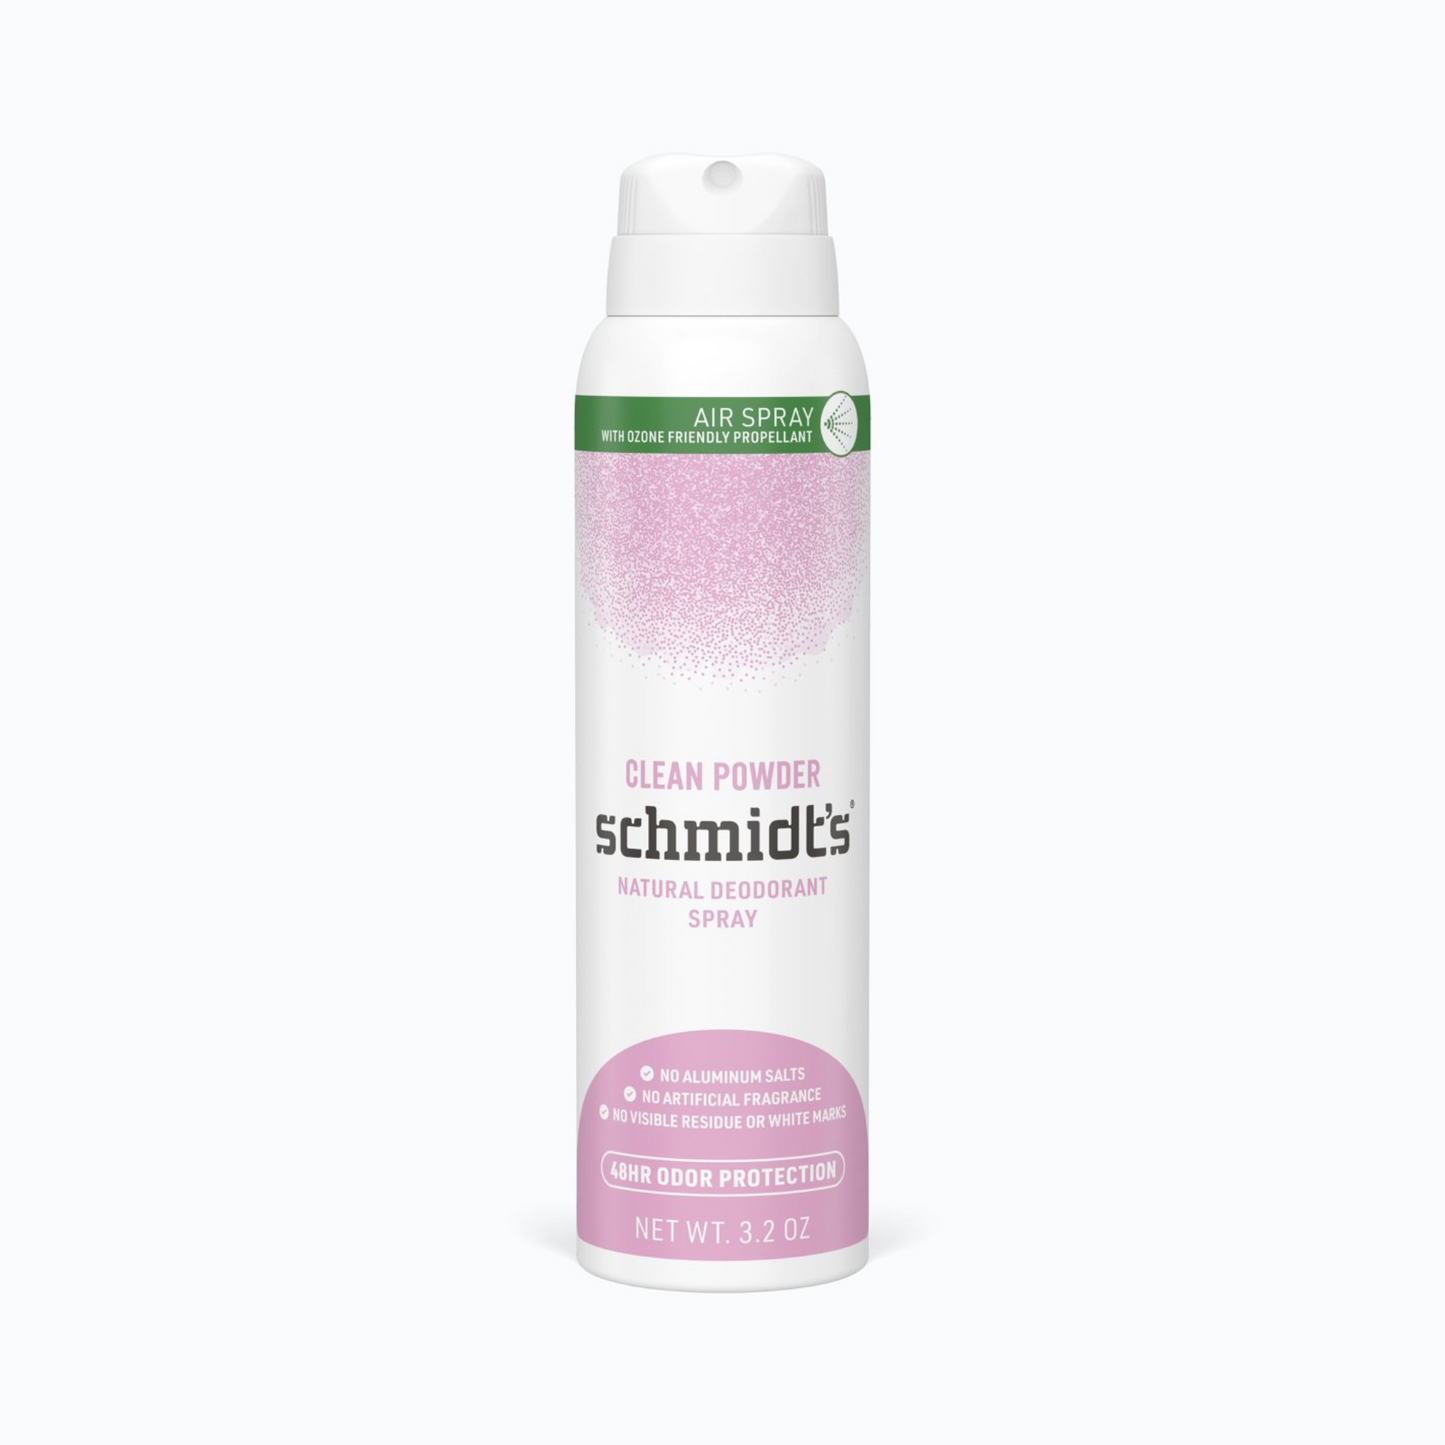 Primary Image of Schmidt's Clean Powder Deo Spray (3.2 oz)